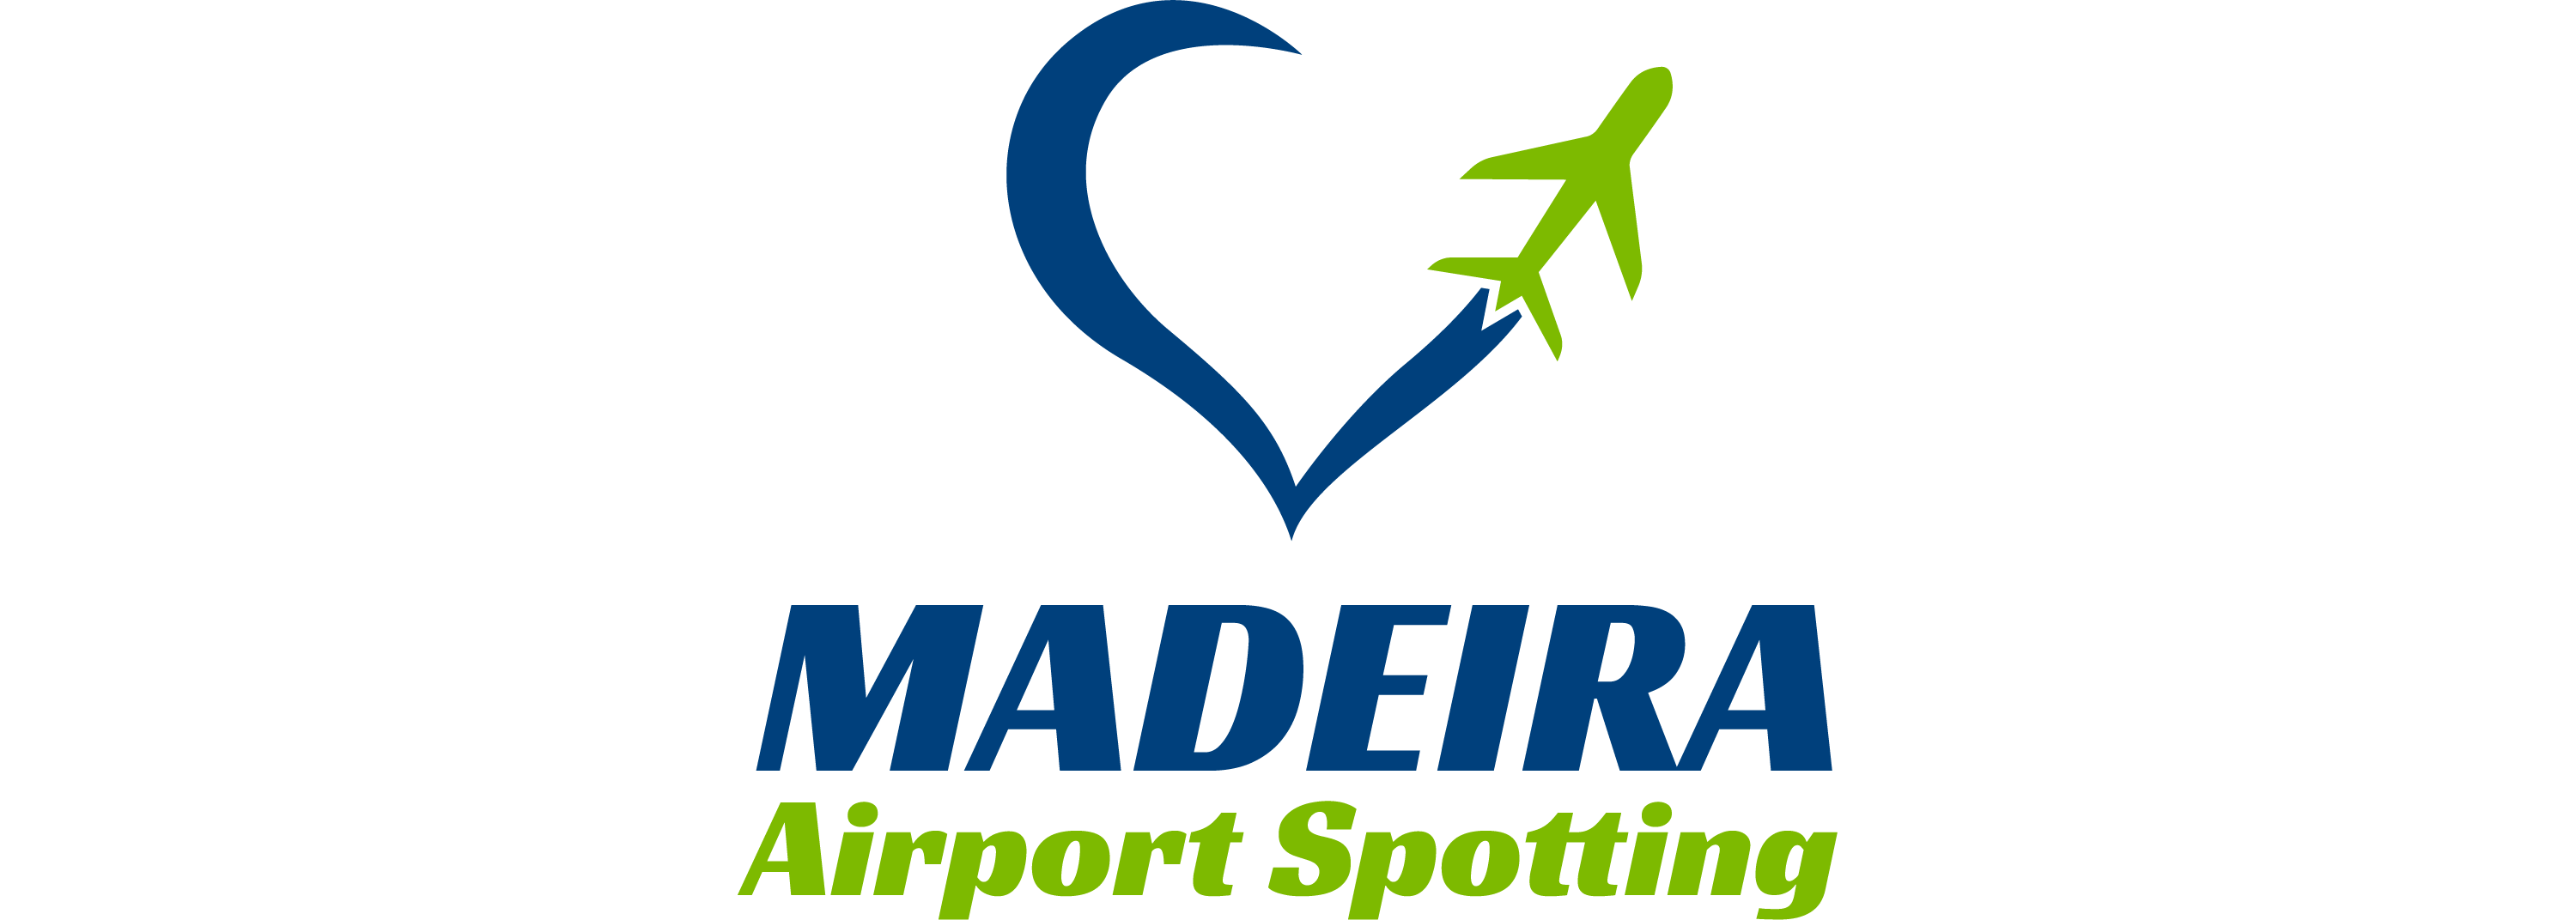 Madeira Airport Spotting